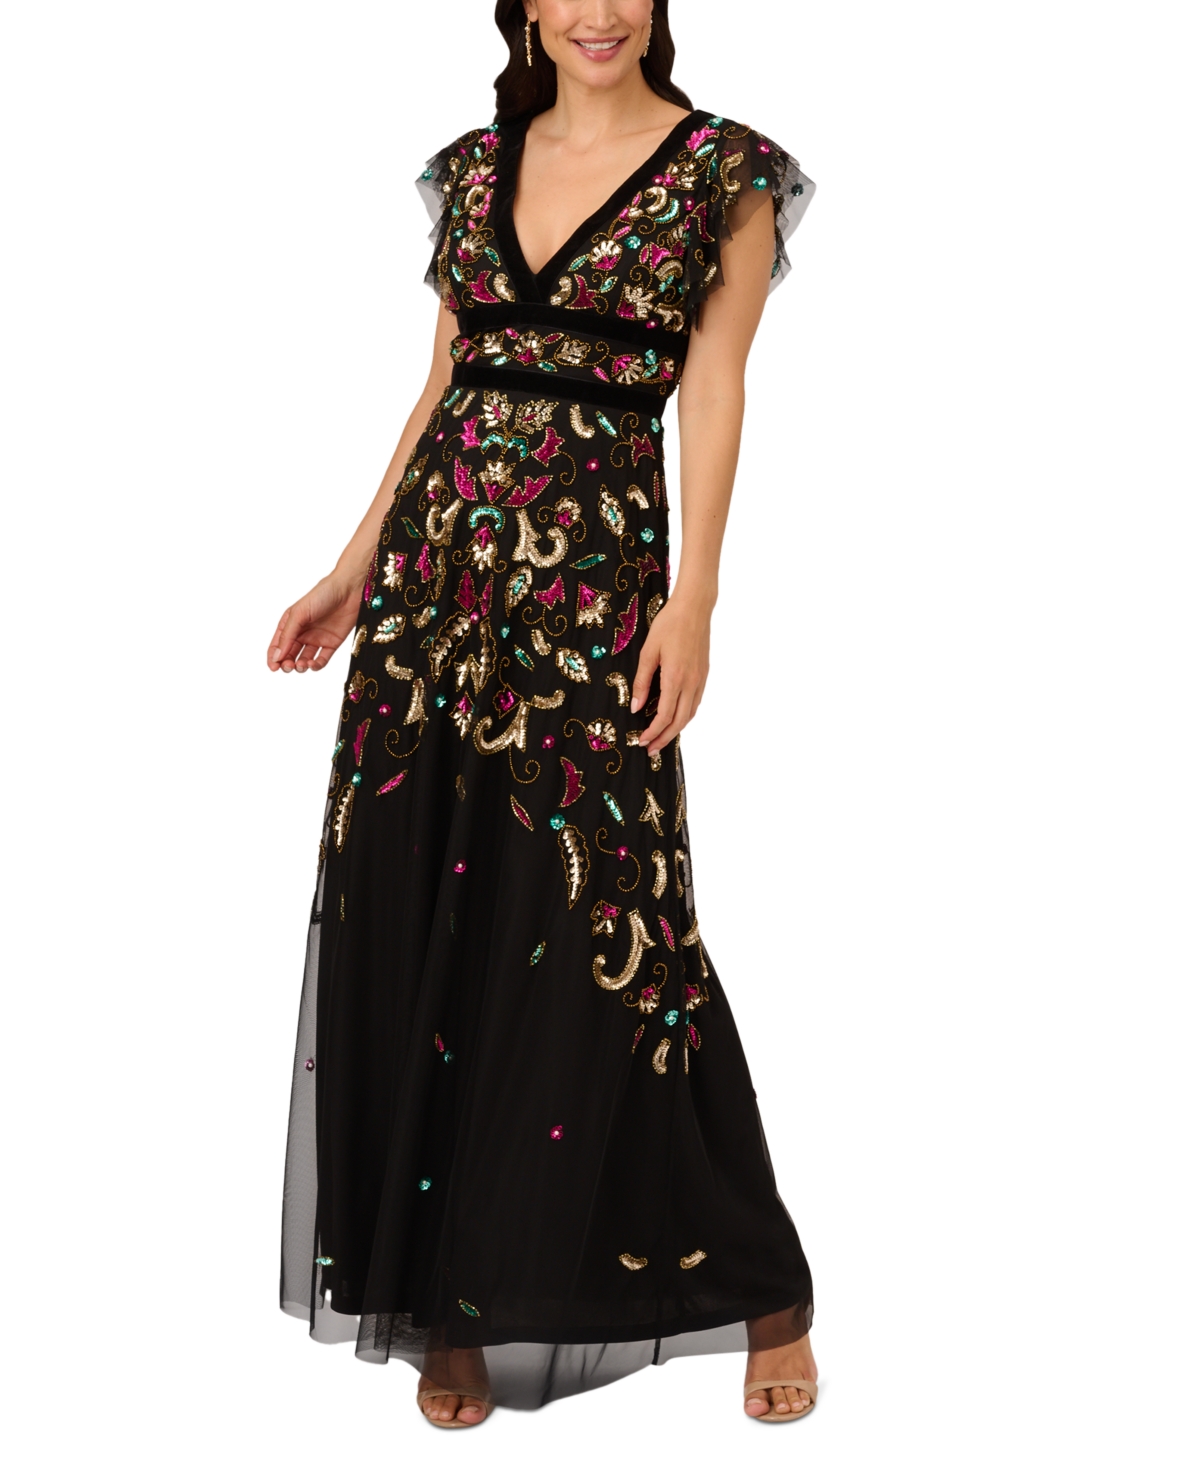 Edwardian Evening Gowns, Ballgowns, Formal Dresses Adrianna Papell Womens Beaded Velvet-Trimmed Gown - Black Multi $349.00 AT vintagedancer.com